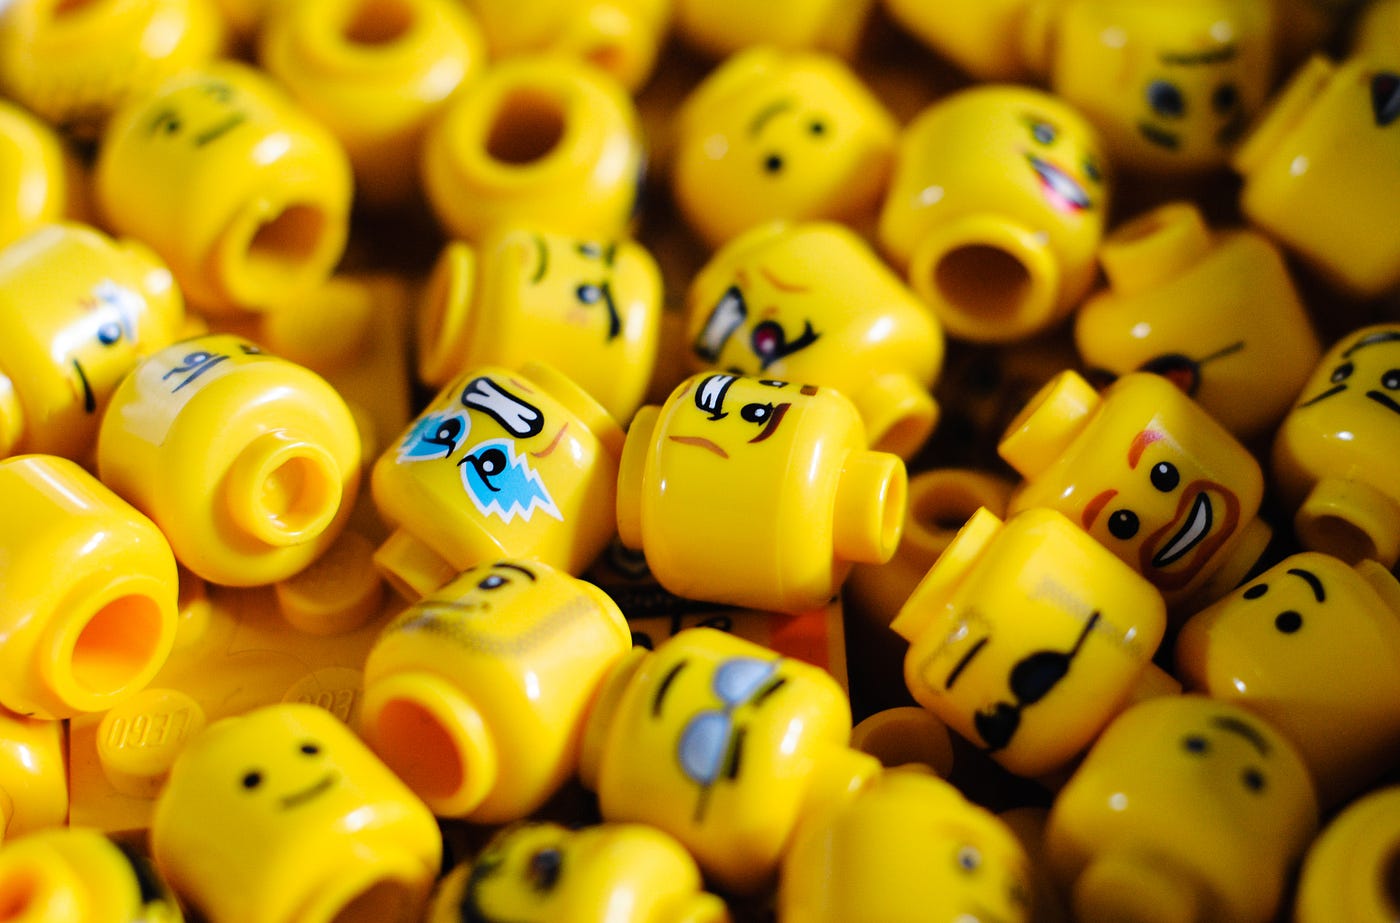 Organizing the Legos